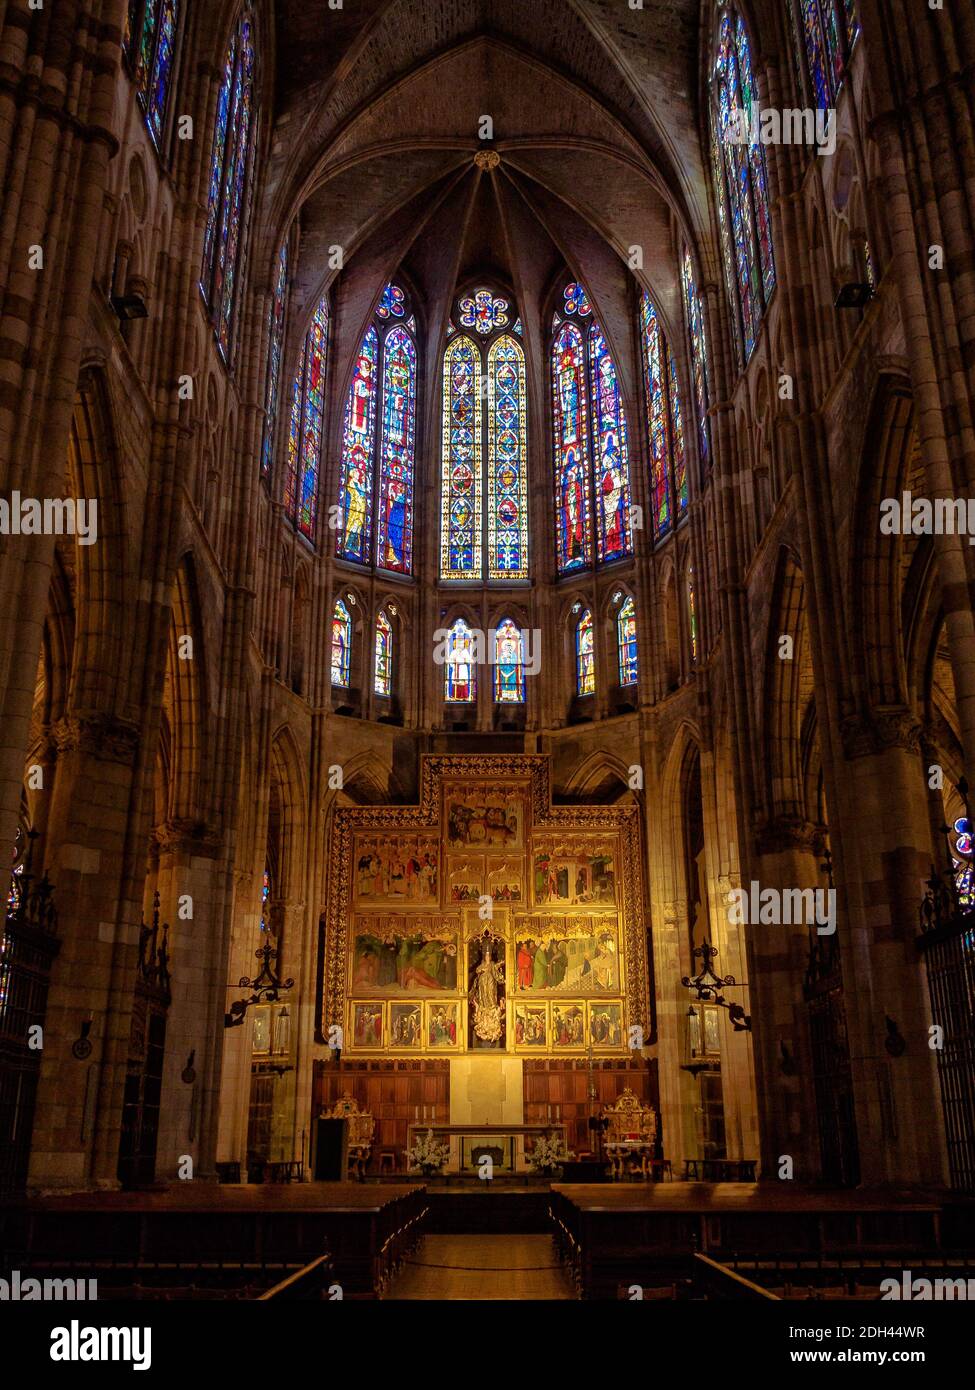 Main altar in the semicircular apse of the Santa Maria de Leon Cathedral - Leon, Castile and Leon, Spain Stock Photo